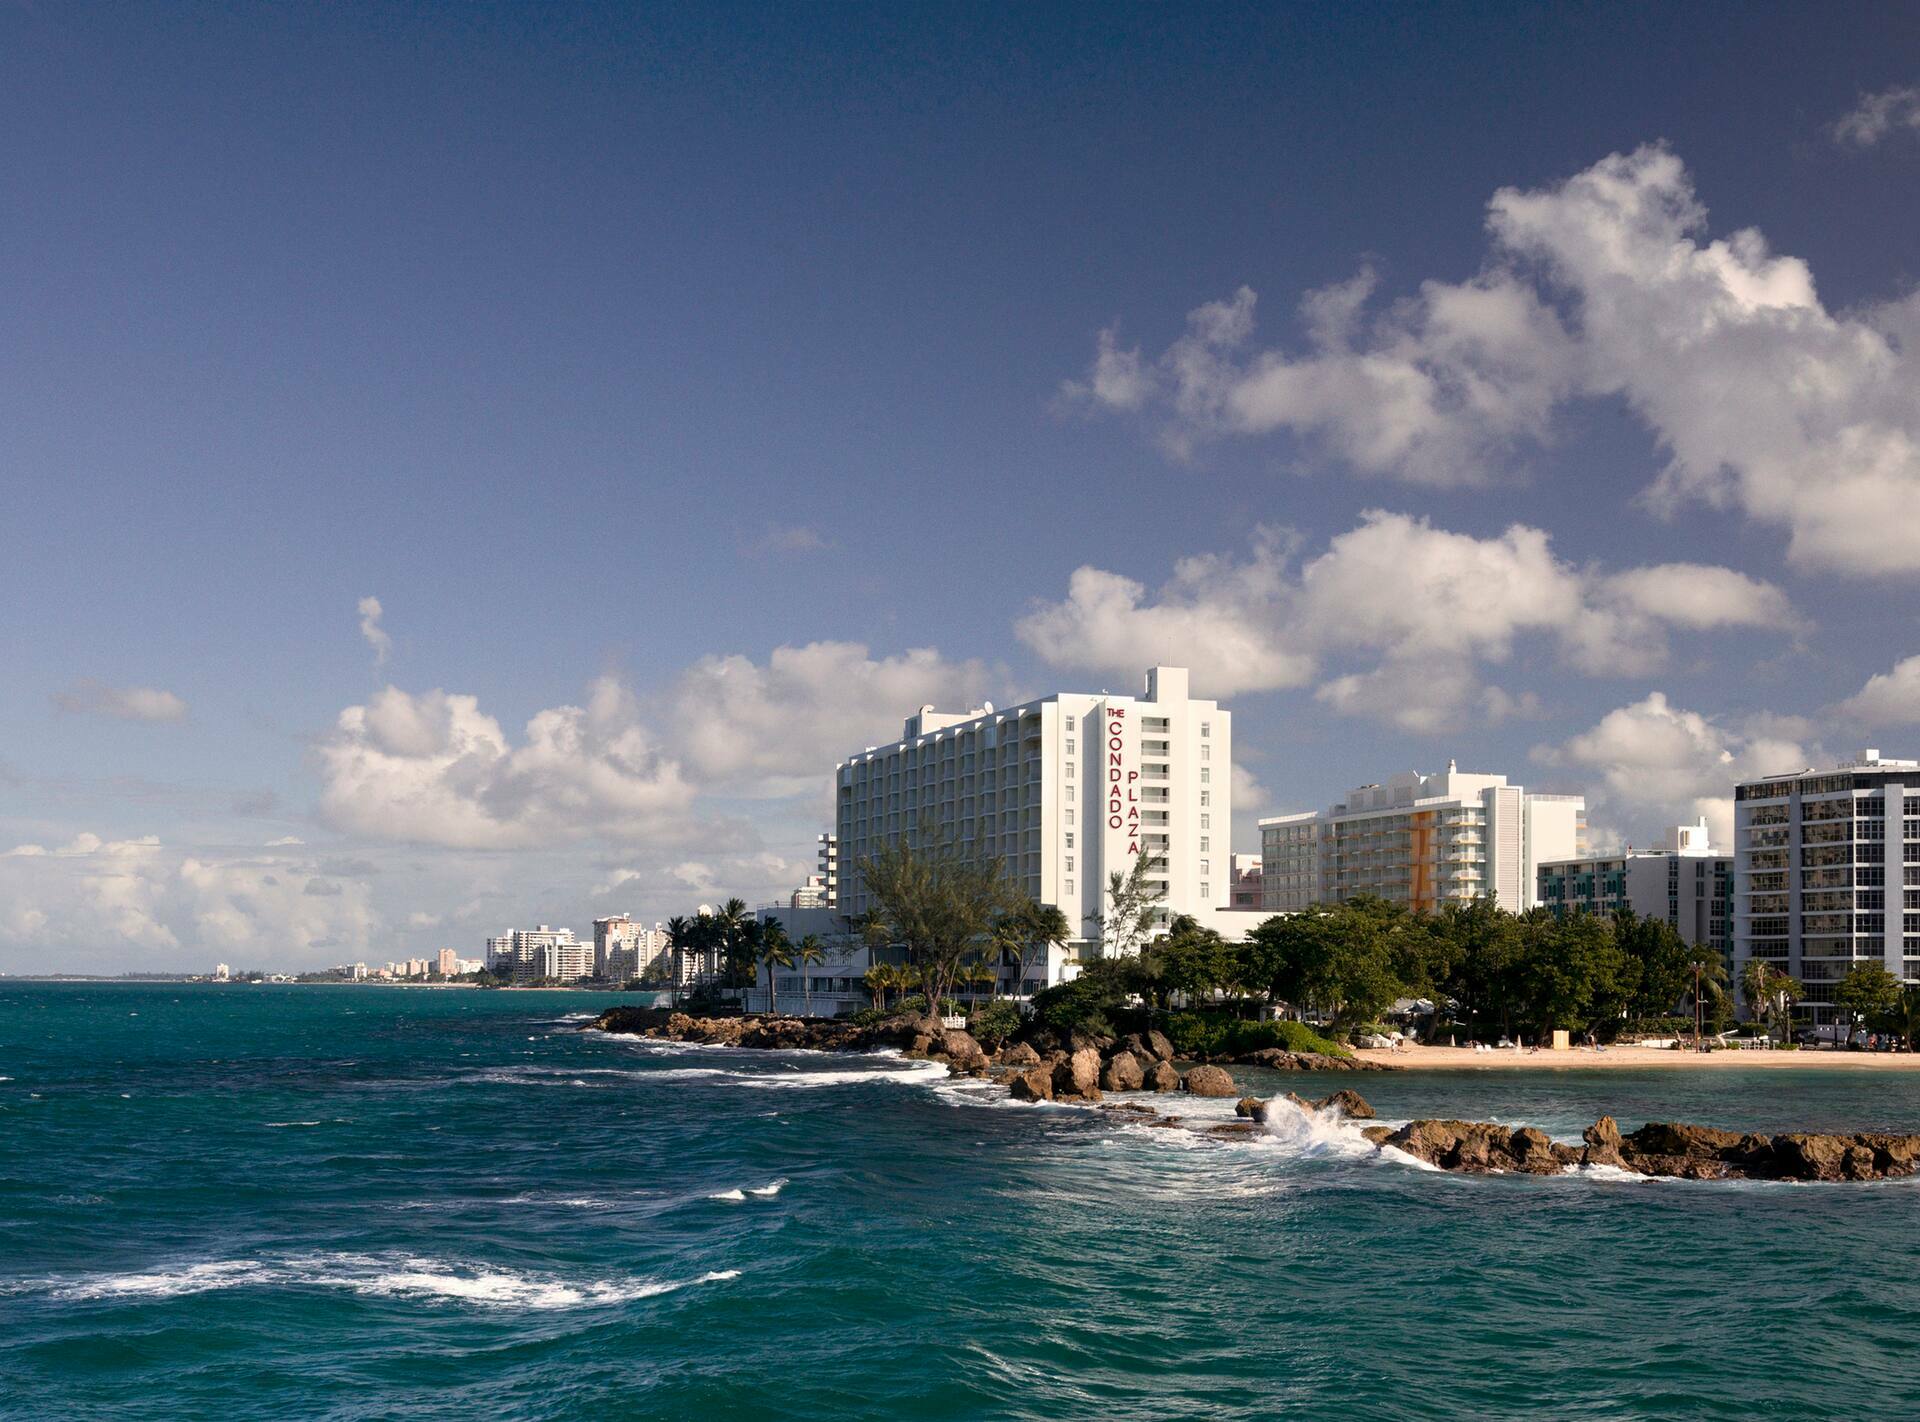 Photo of The Condado Plaza Hilton, San Juan, Puerto Rico